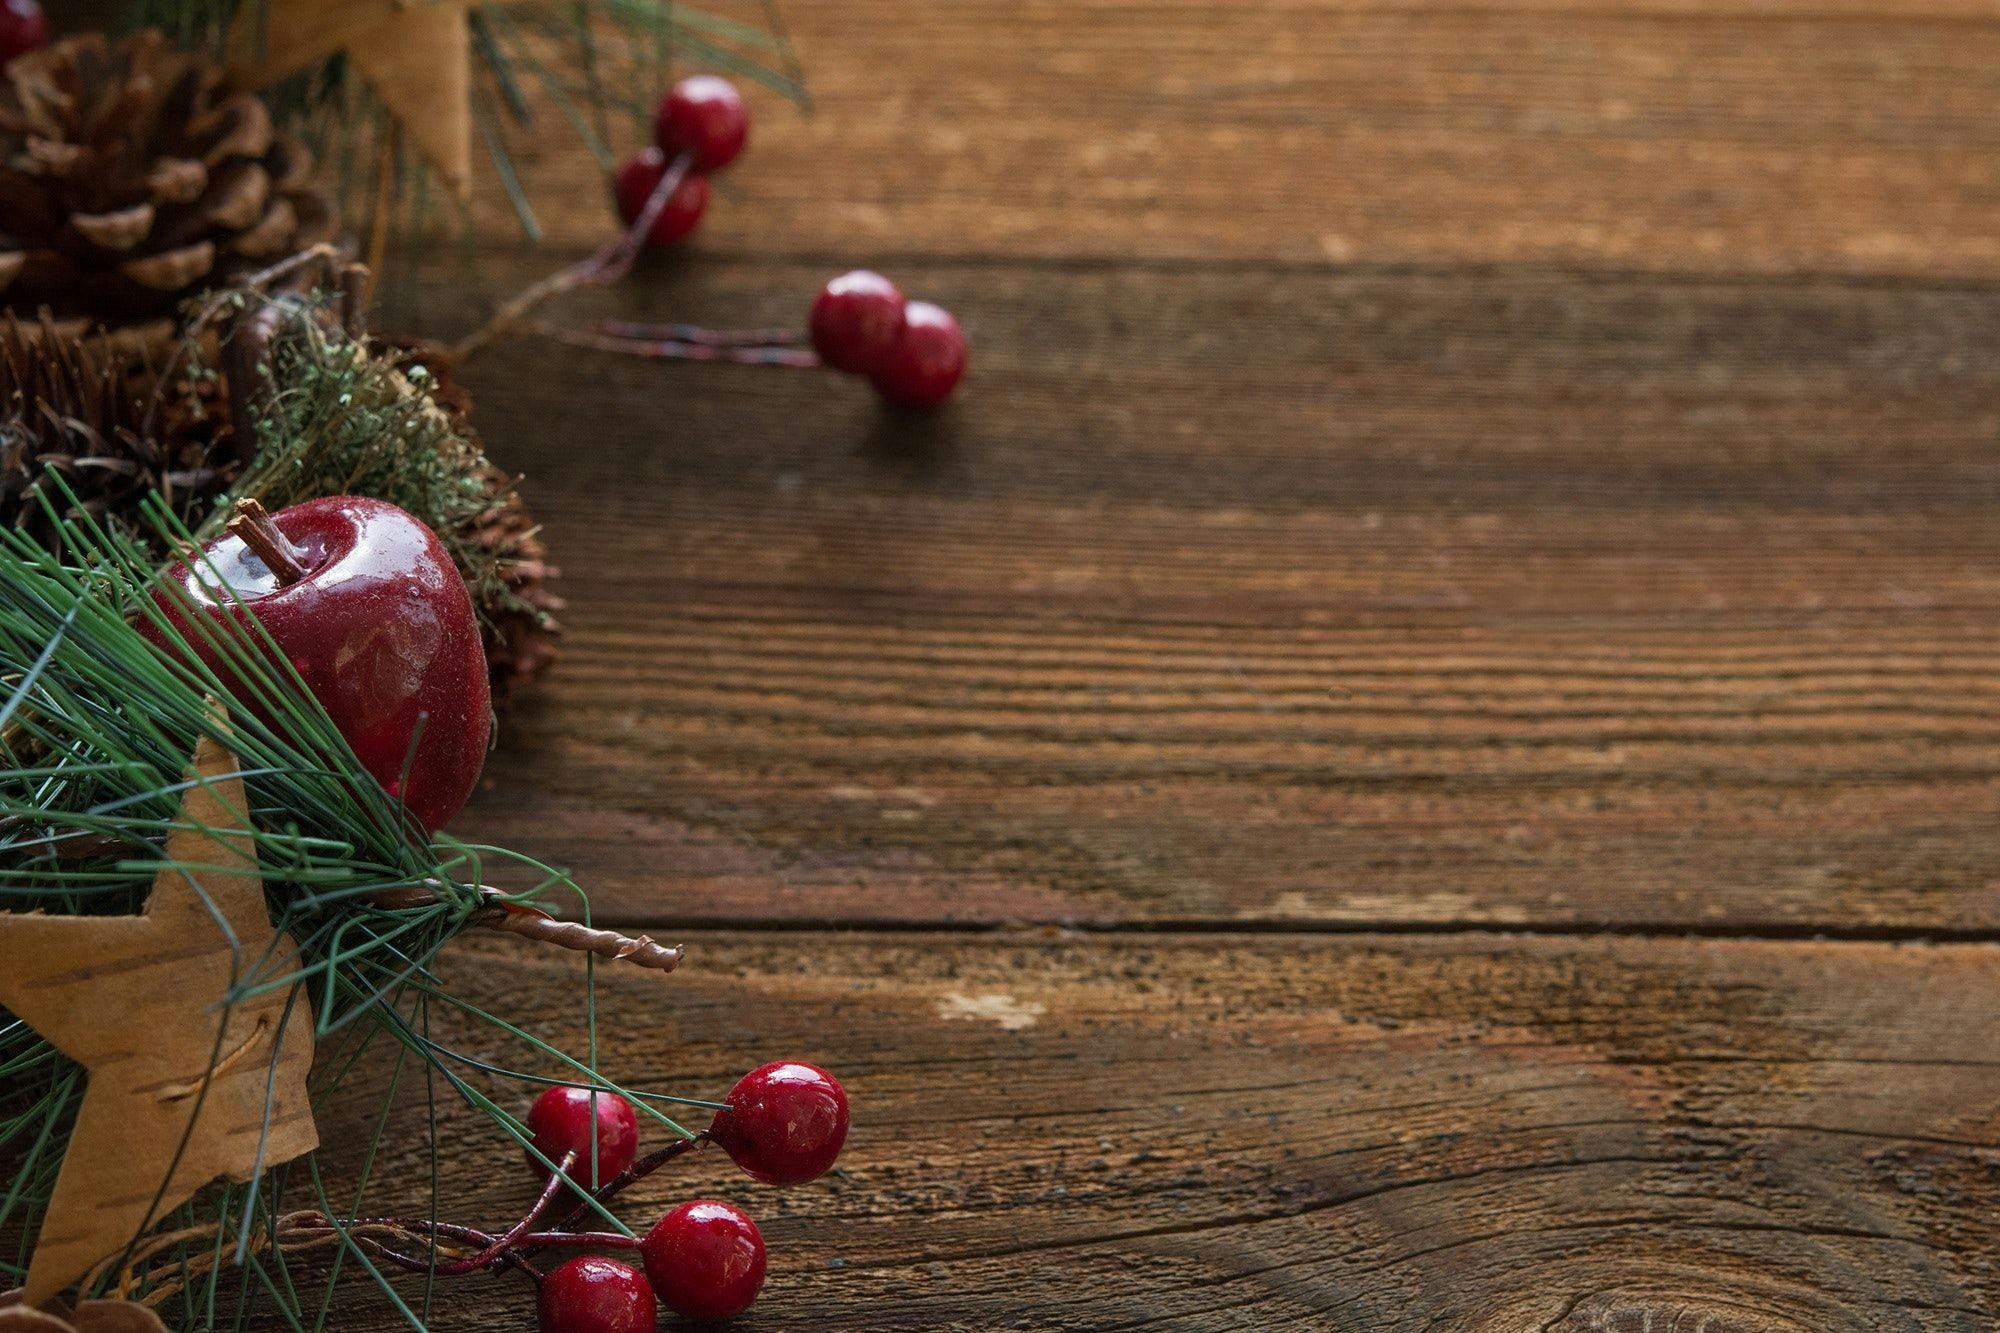 Refreshing Your Wood Floor Before Christmas